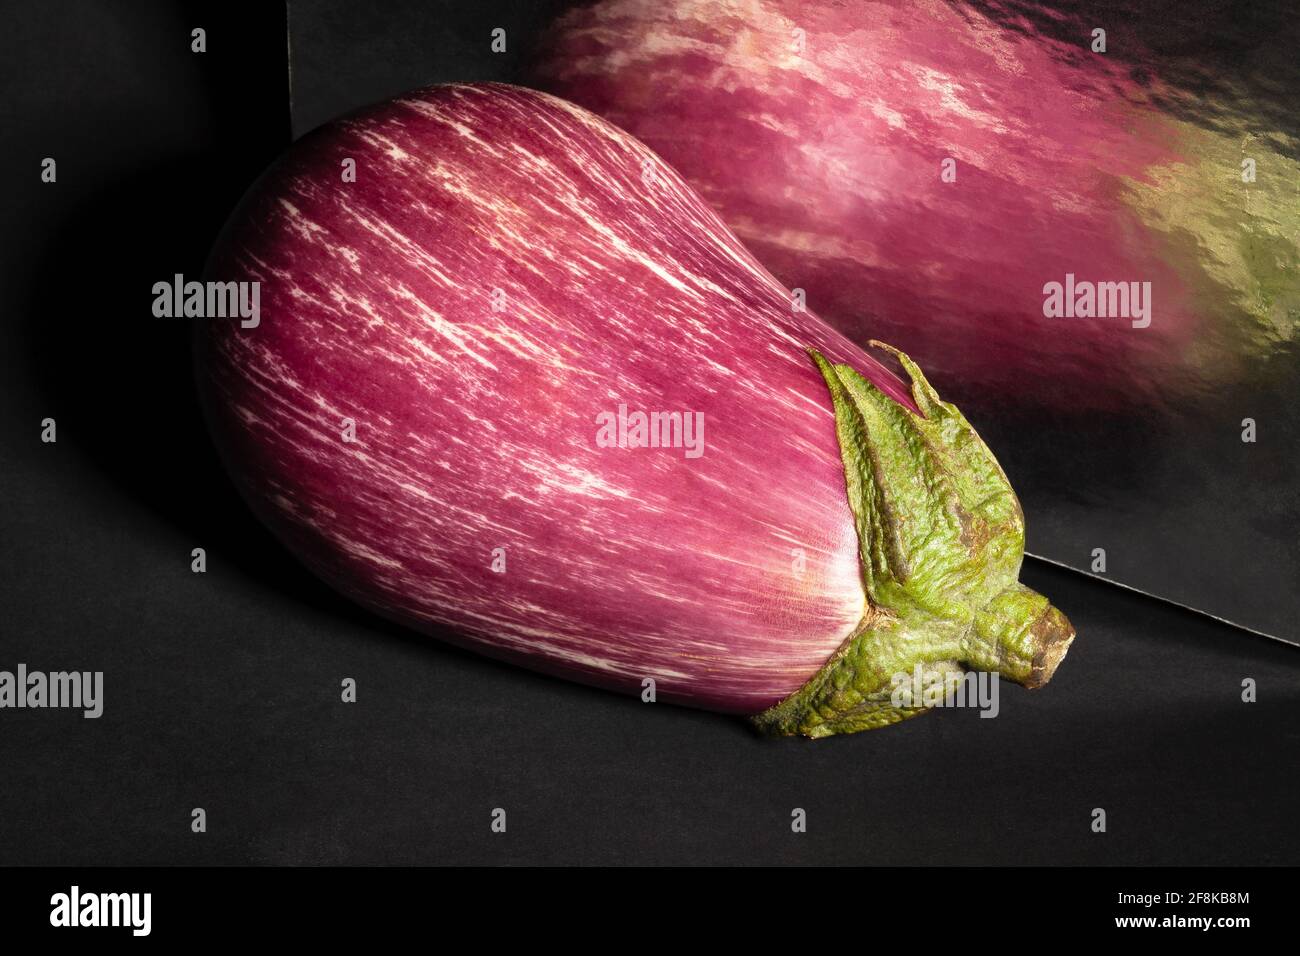 striped eggplant on black background Stock Photo